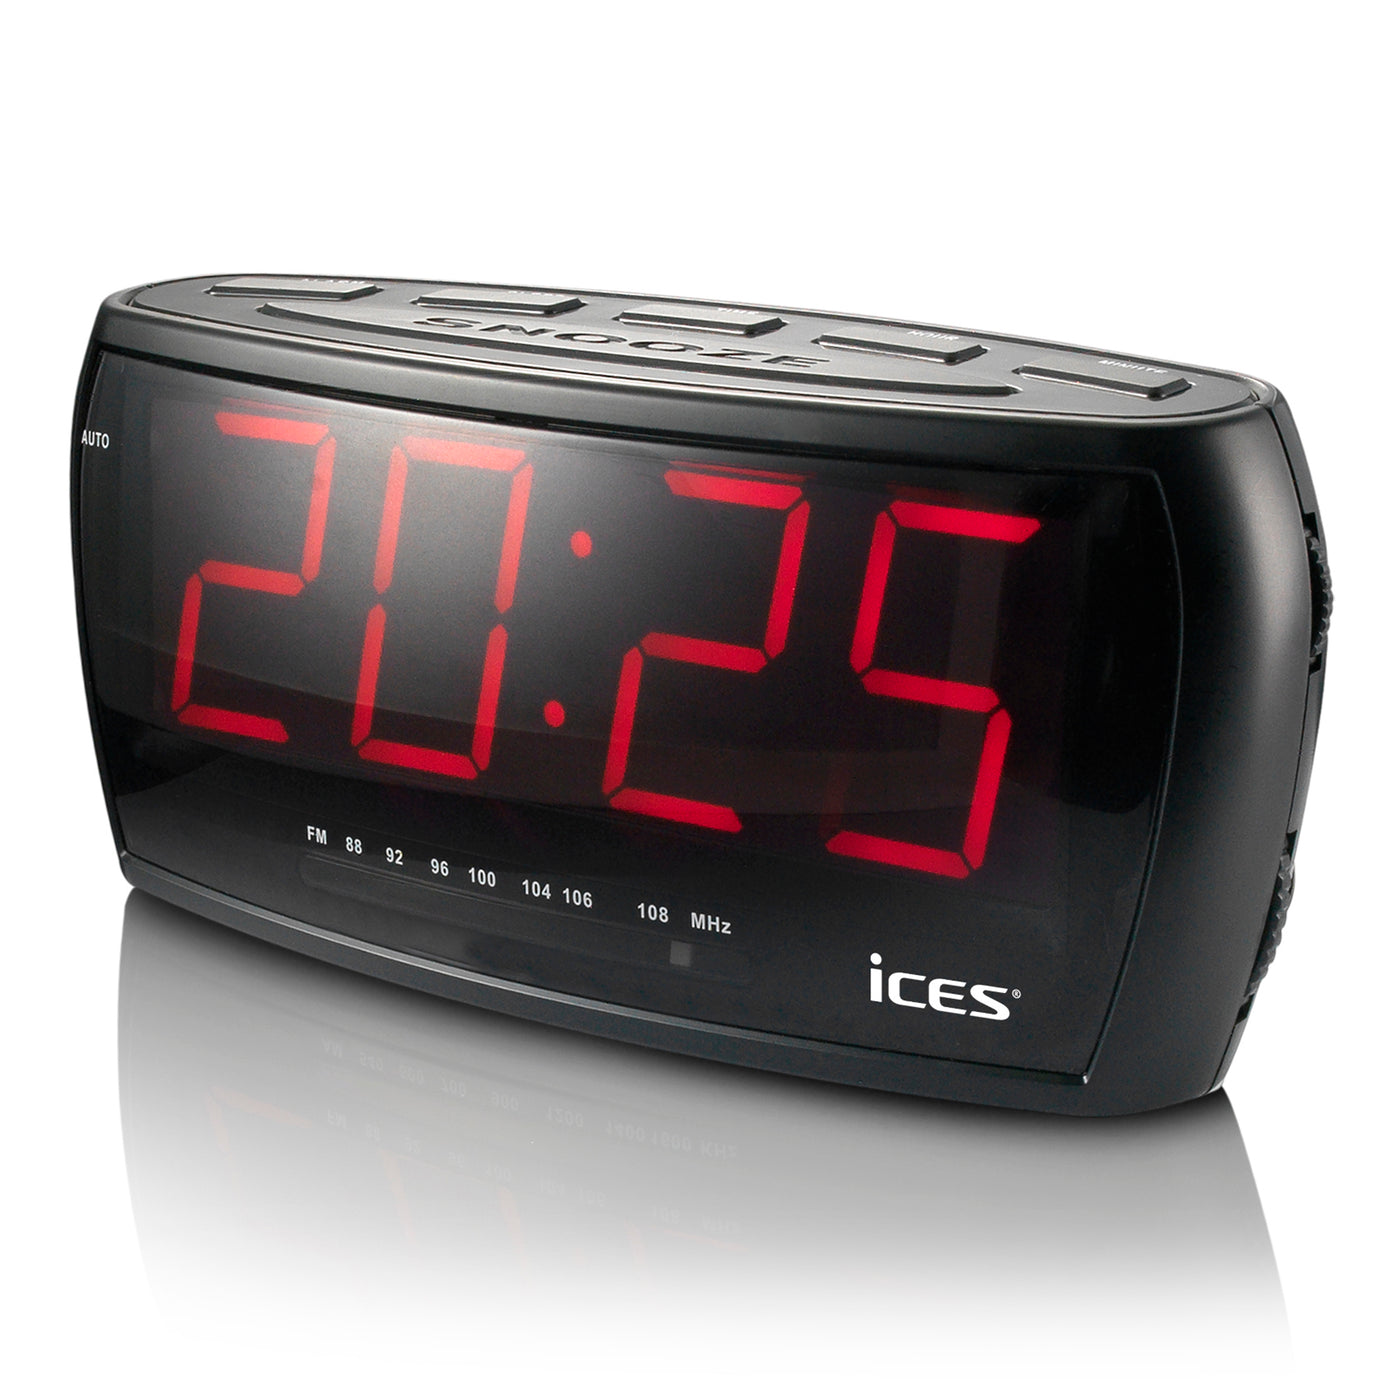 Ices ICR-230-1 - FM clock radio, display 1,8" - Black